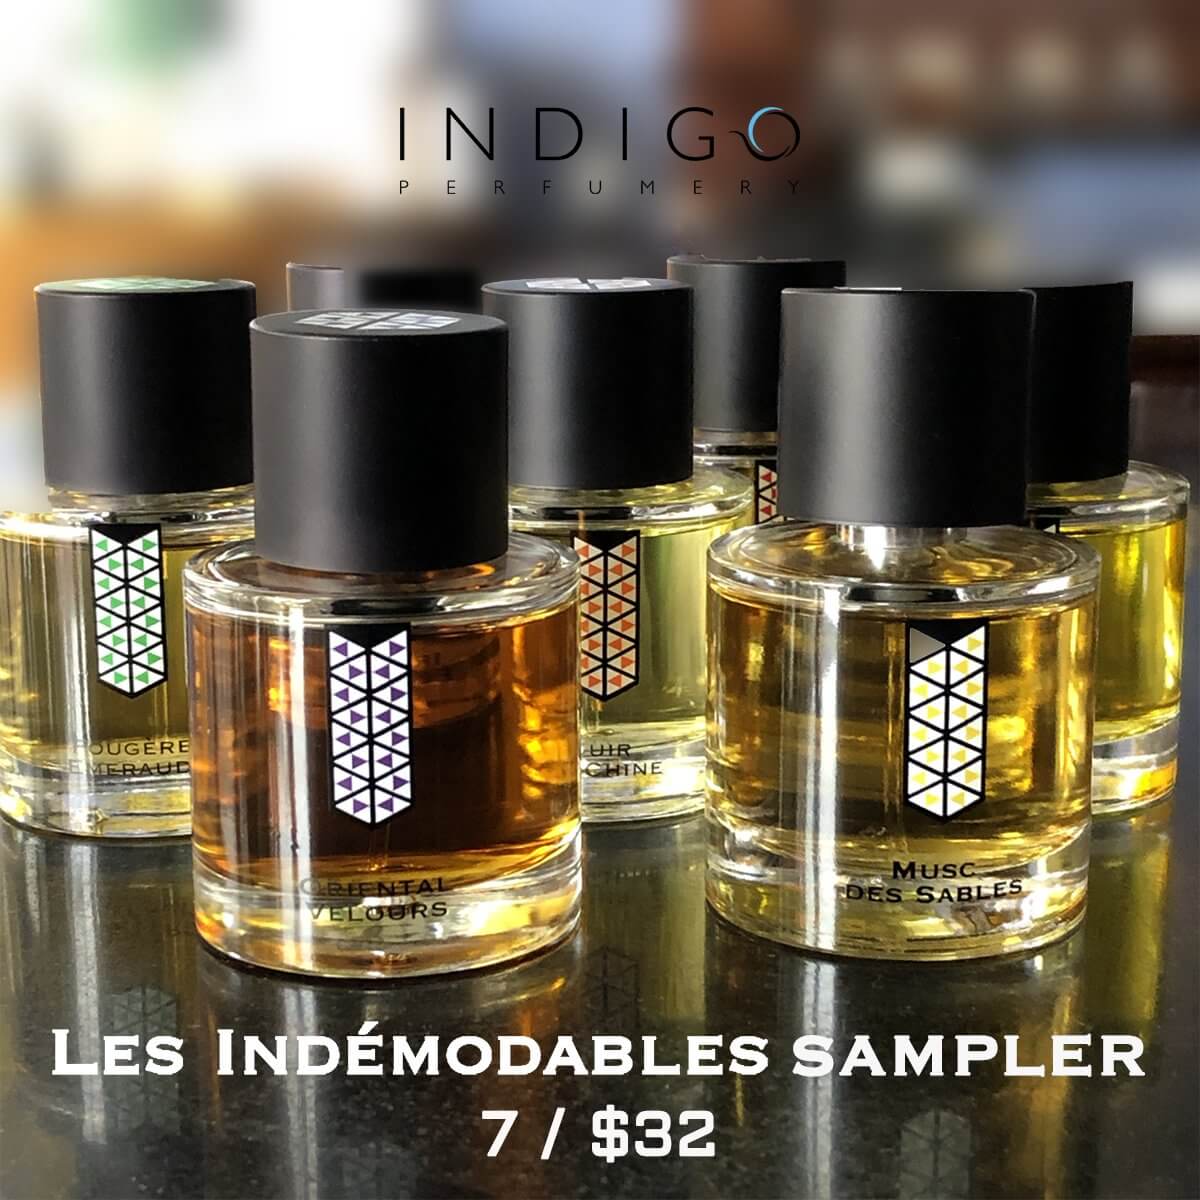 Les Indemodables Sampler at Indigo Perfumery